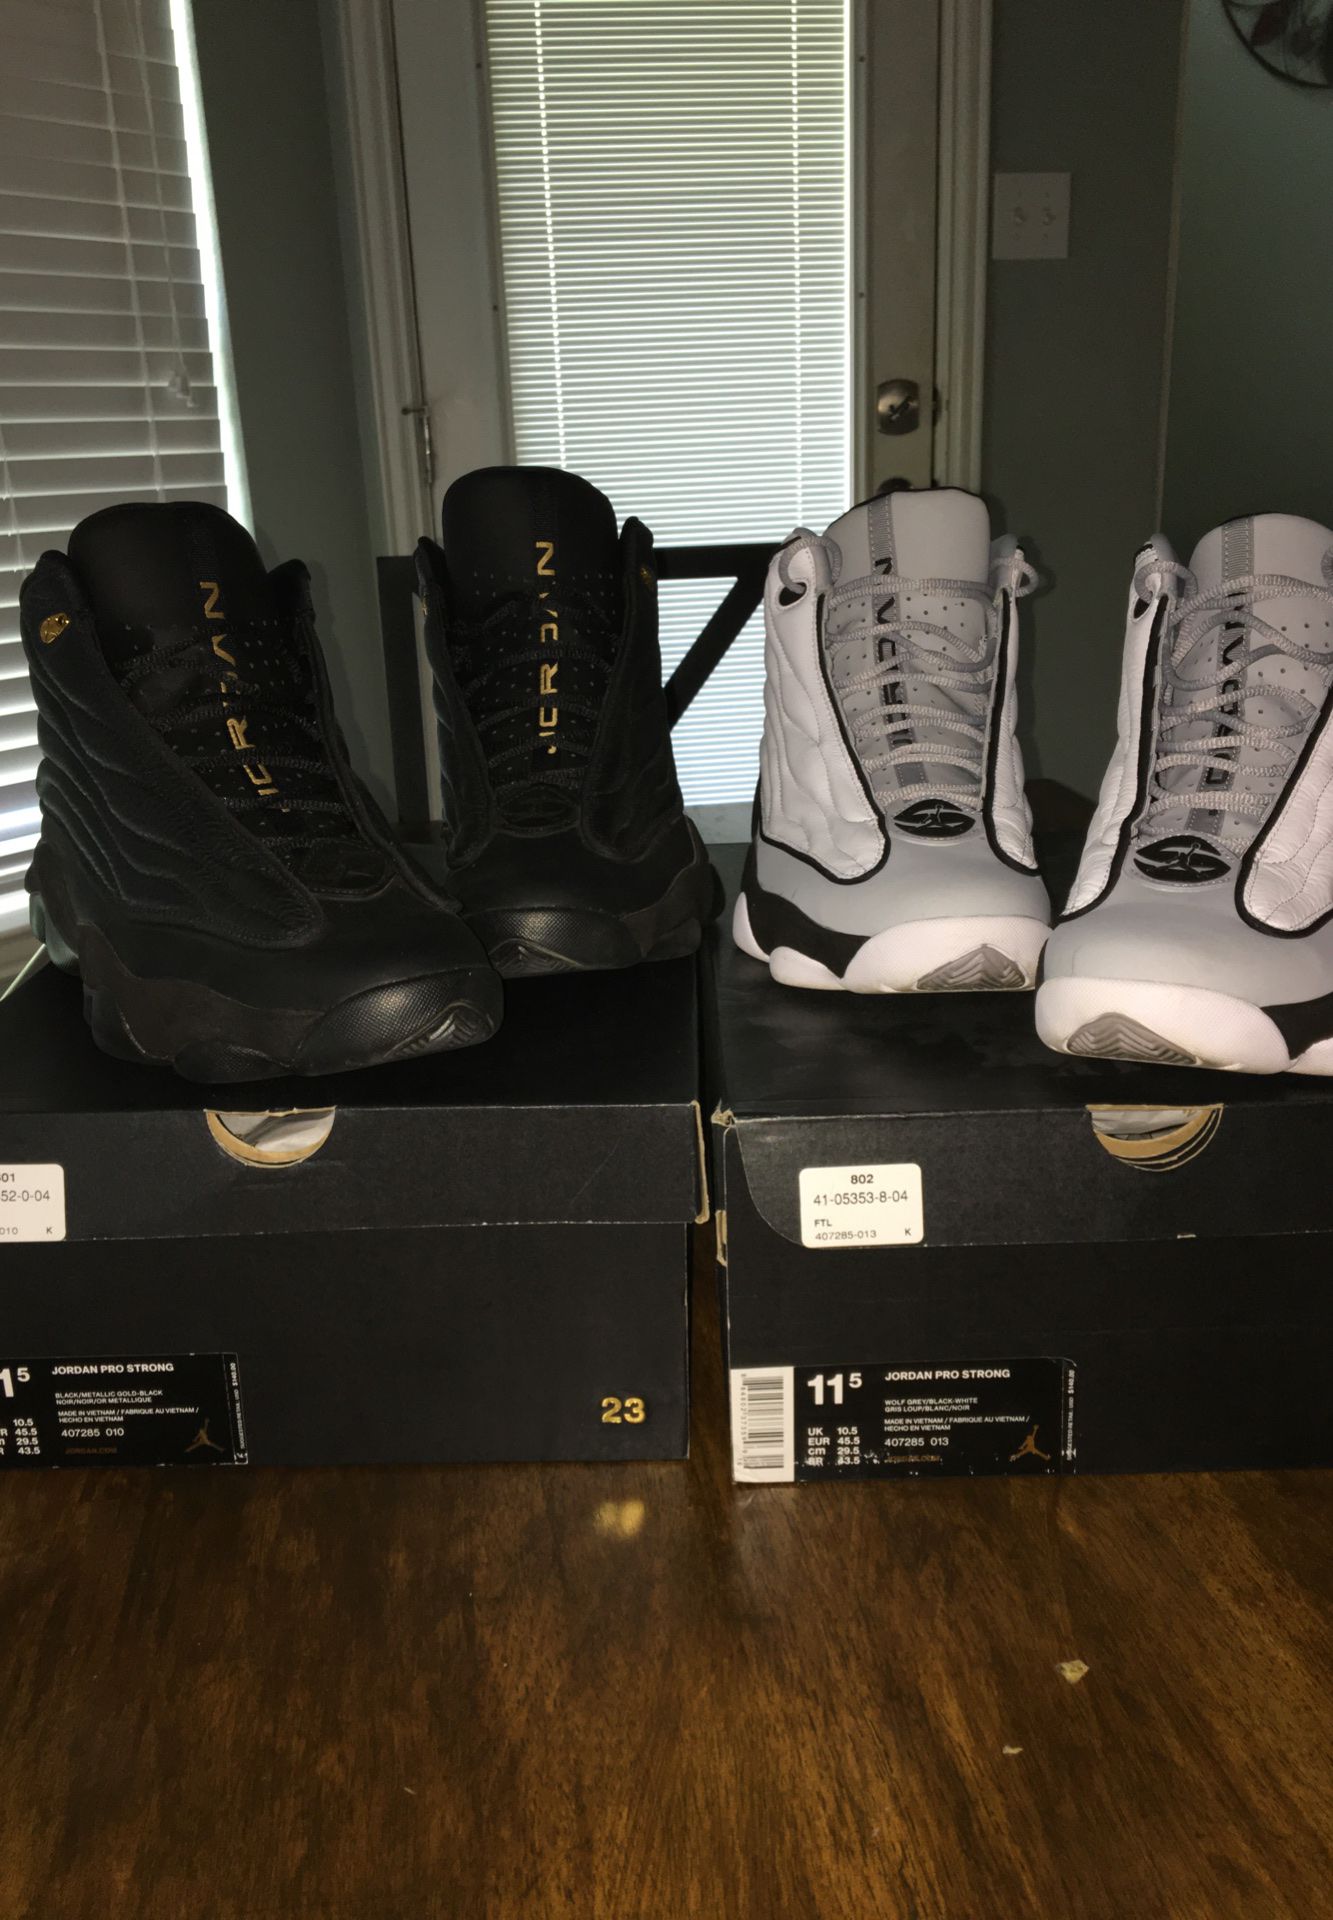 2 pairs of Jordan. 1 all black pro strong size 11.5, 1 white,grey,black 11.5